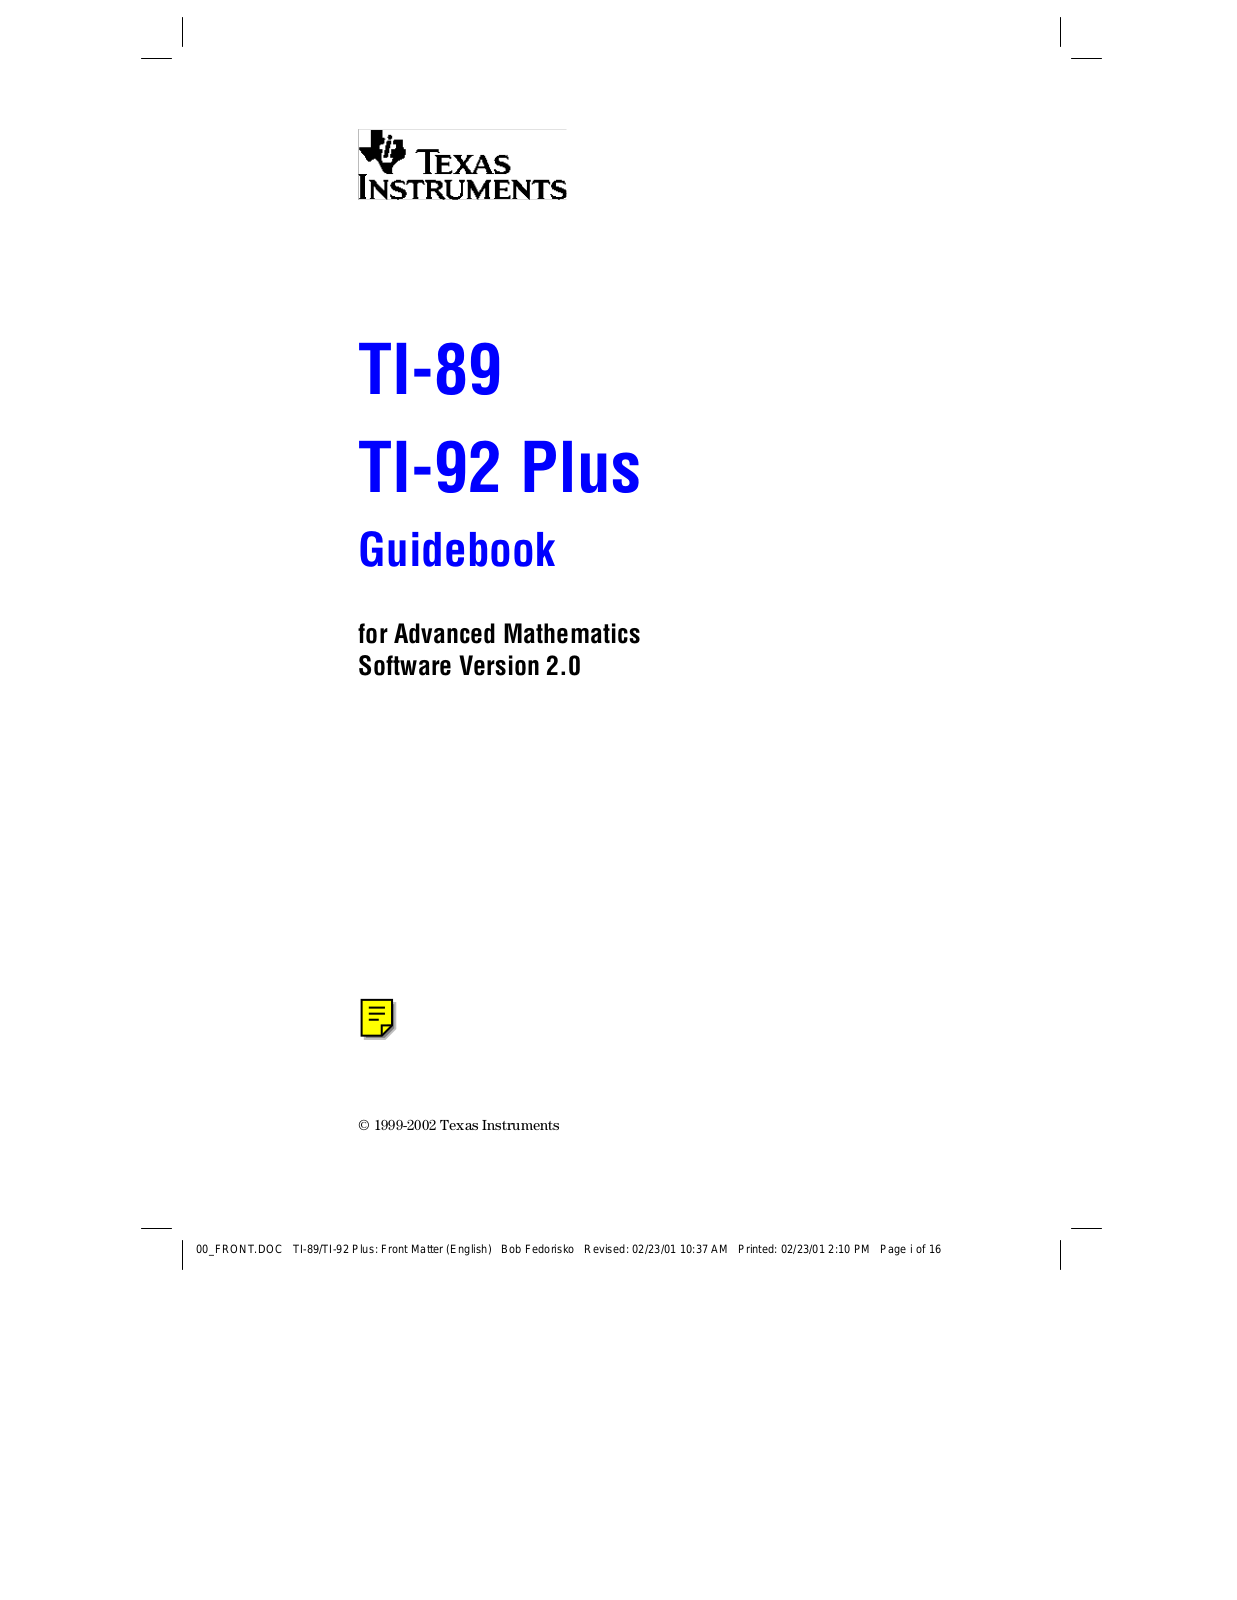 Texas Instruments TI-89, TI-92 Guidebook